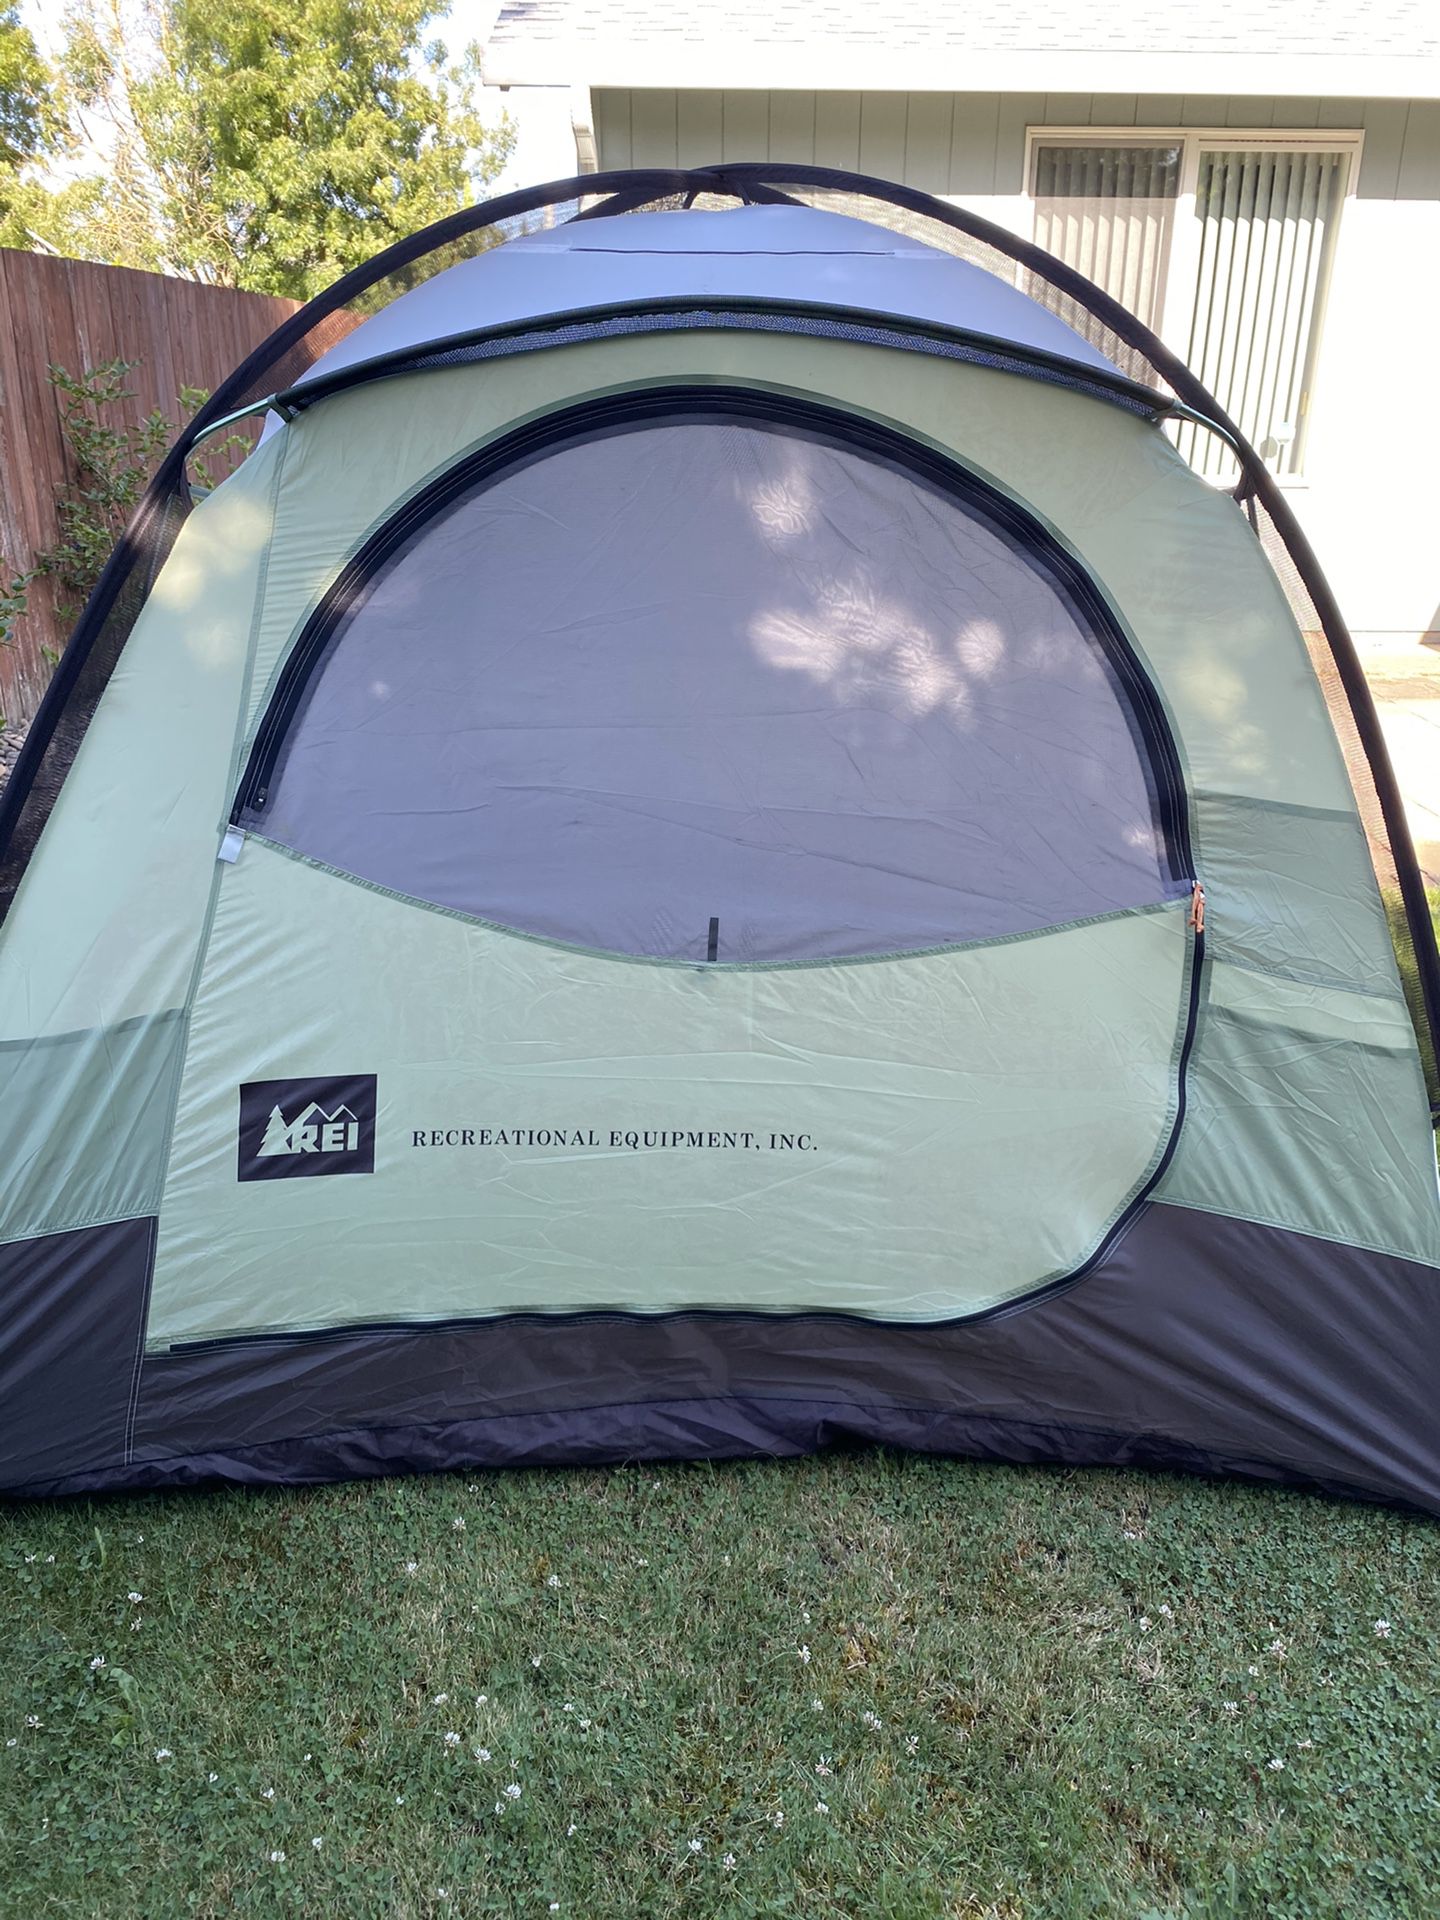 REI Base Camp 4 tent & rain sky